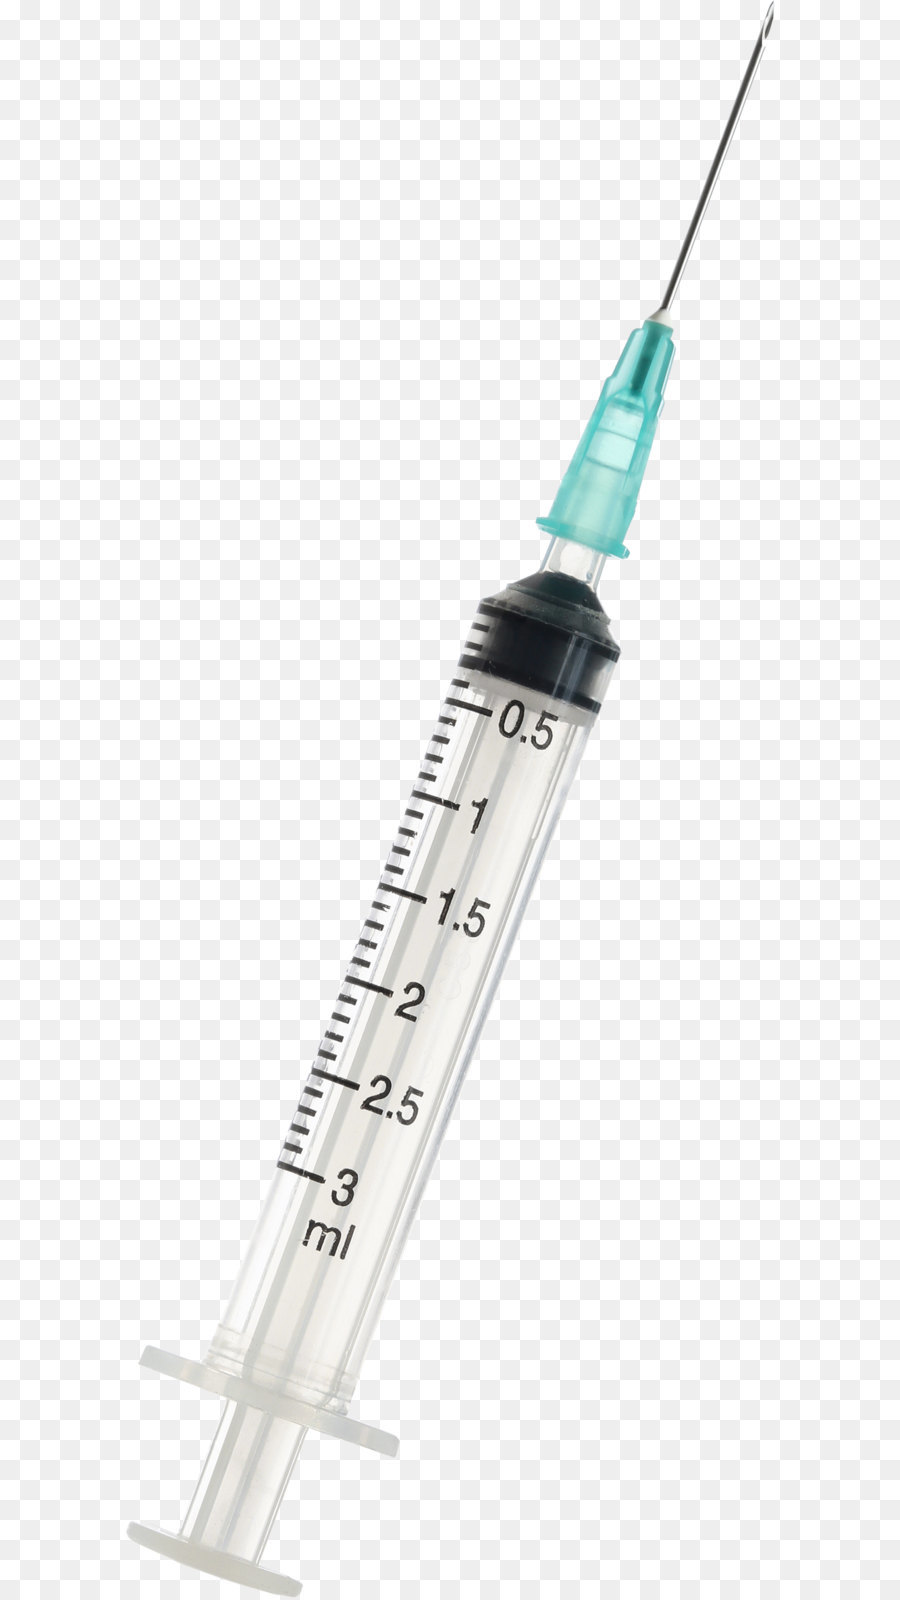 Syringe Hypodermic needle - Syringe PNG png download - 963*2367 - Free Transparent Syringe png Download.